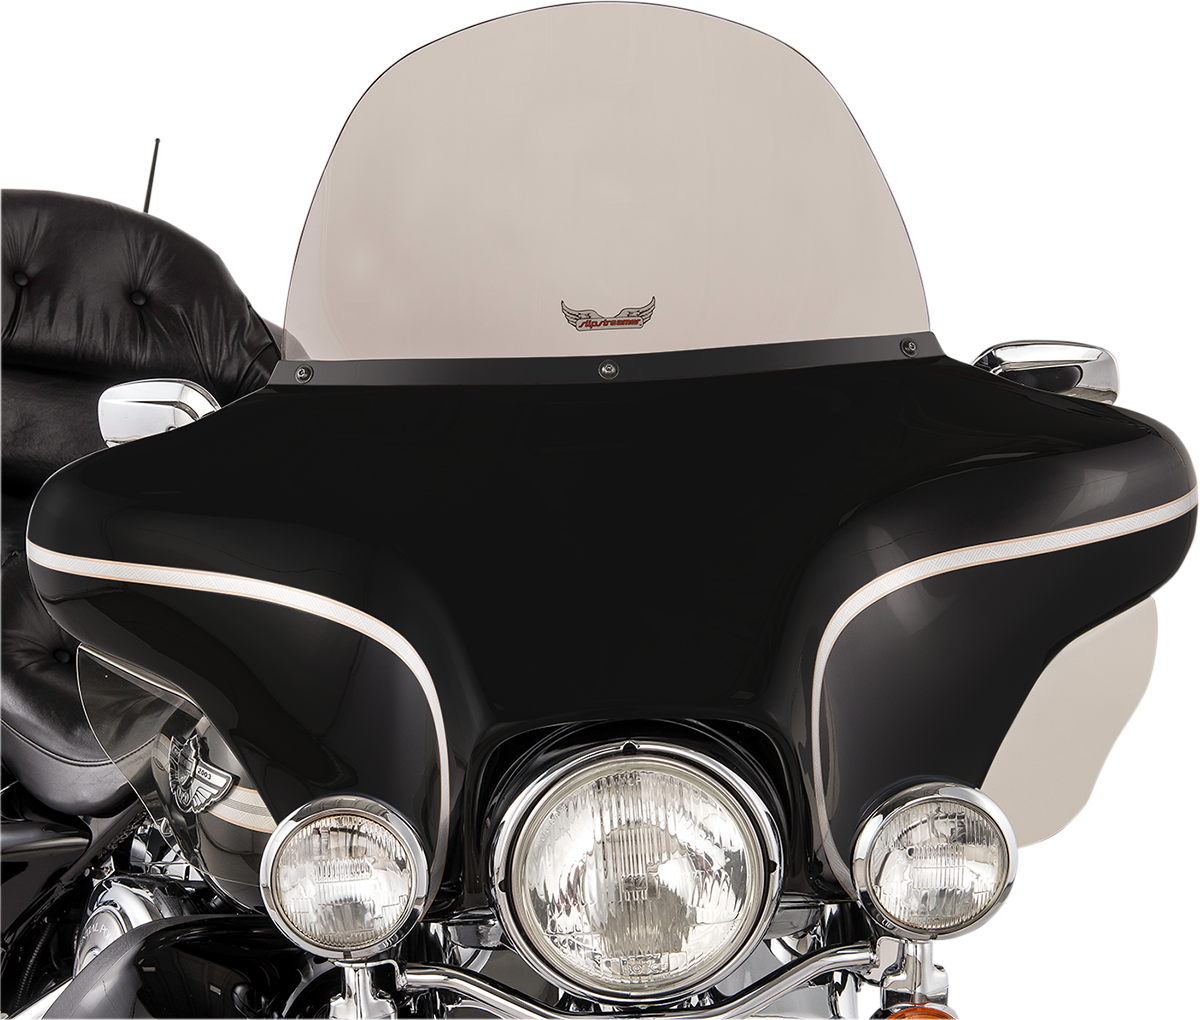 Slipstreamer 13" Smoke Motorcycle Fairing Windshield 1996-2013 Harley Softail